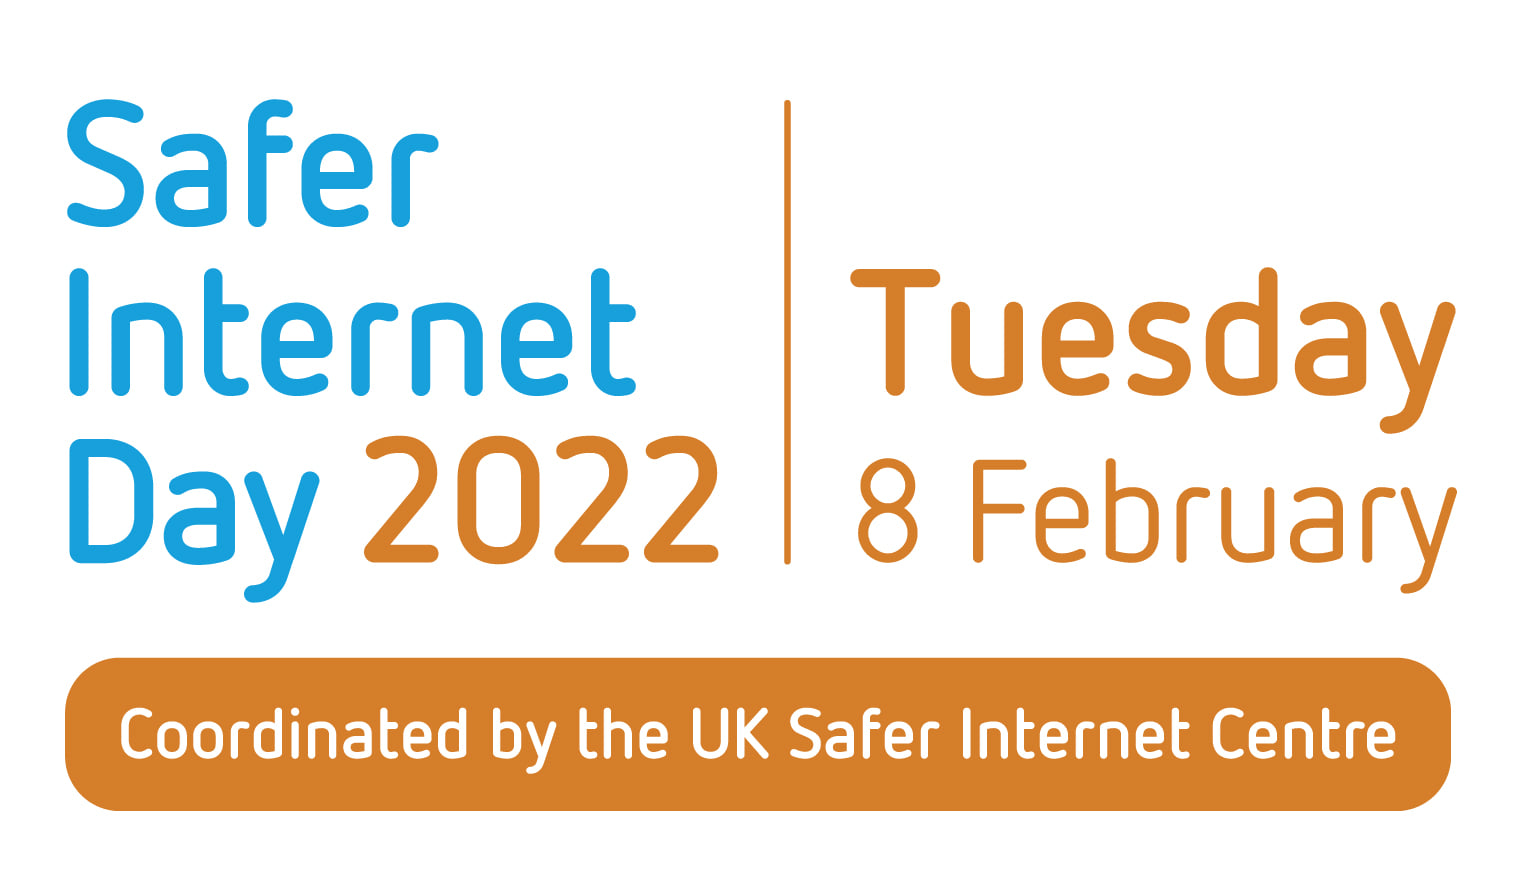 A promotional banner for Safer Internet Day 2022. The text reads 'Safer Internet Day 2022, Tuesday 8 February, Coordinated by the UK Safer Internet Centre'.